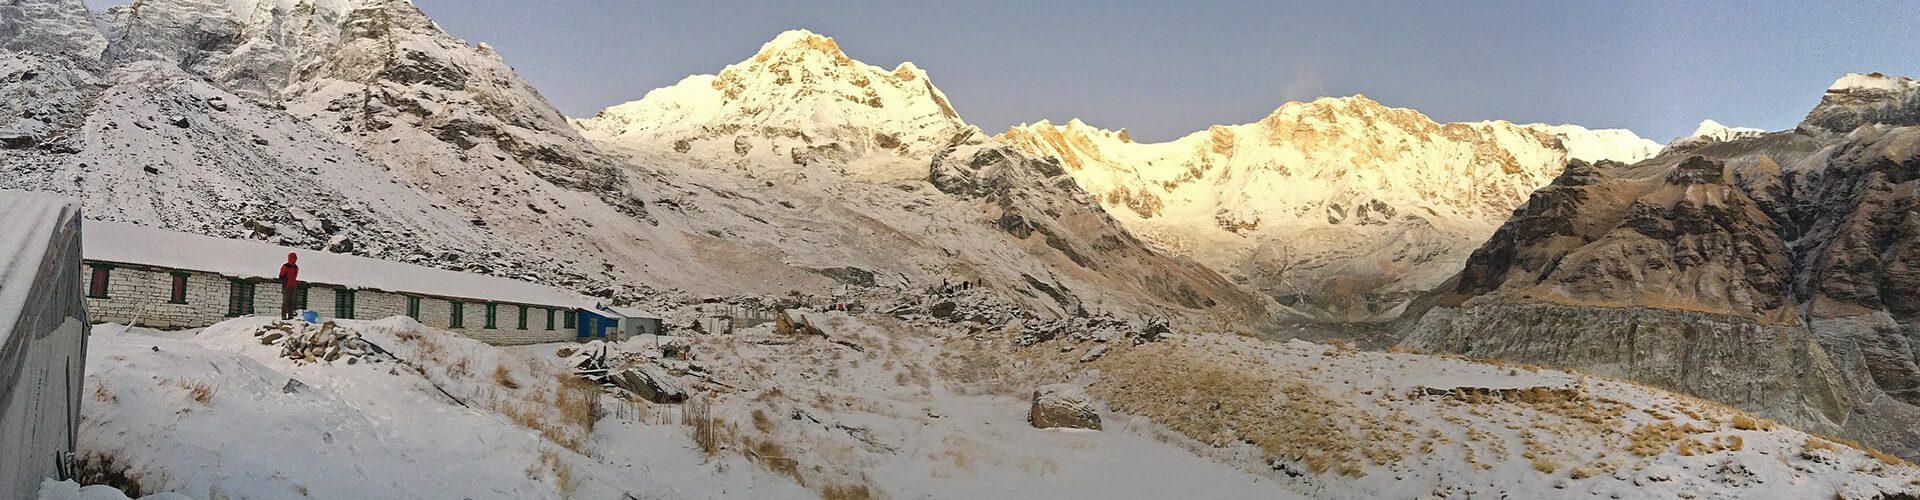 How Difficult is the Annapurna Base Camp Trek?